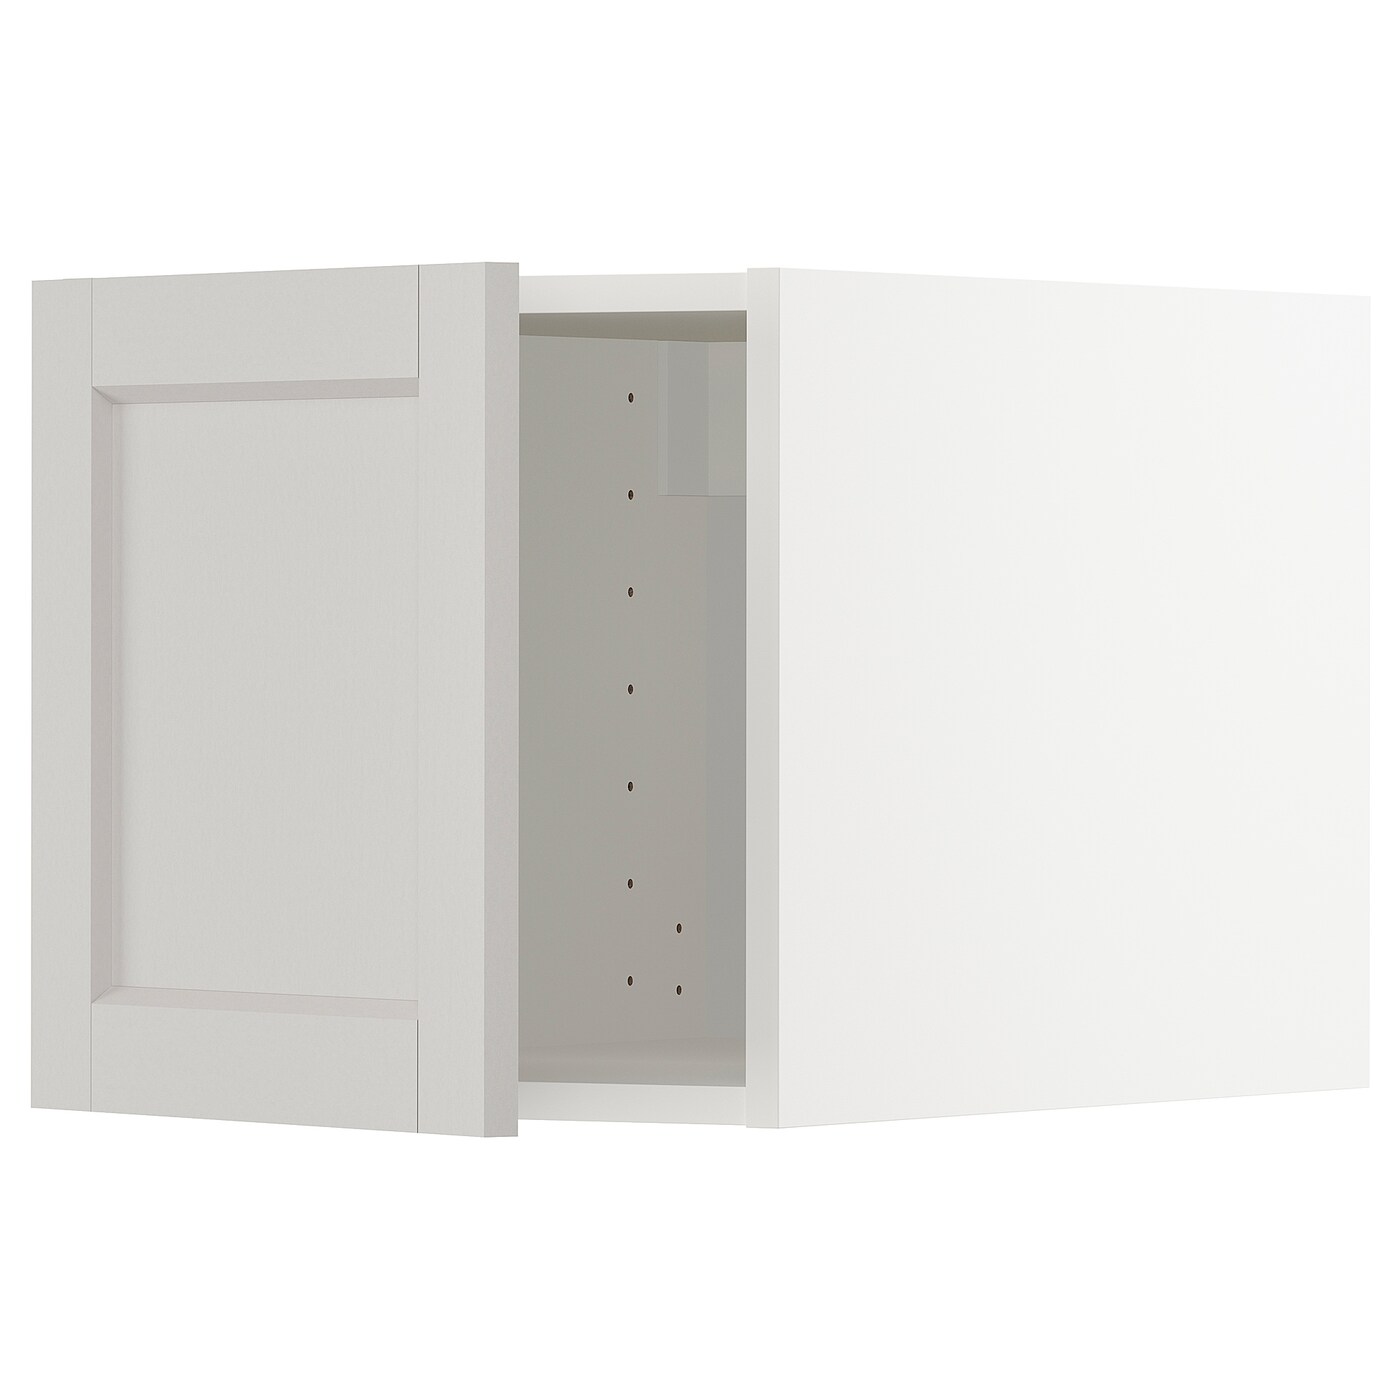 METOD Навесной шкаф - METOD IKEA/ МЕТОД ИКЕА, 40х40 см, белый/светло-серый